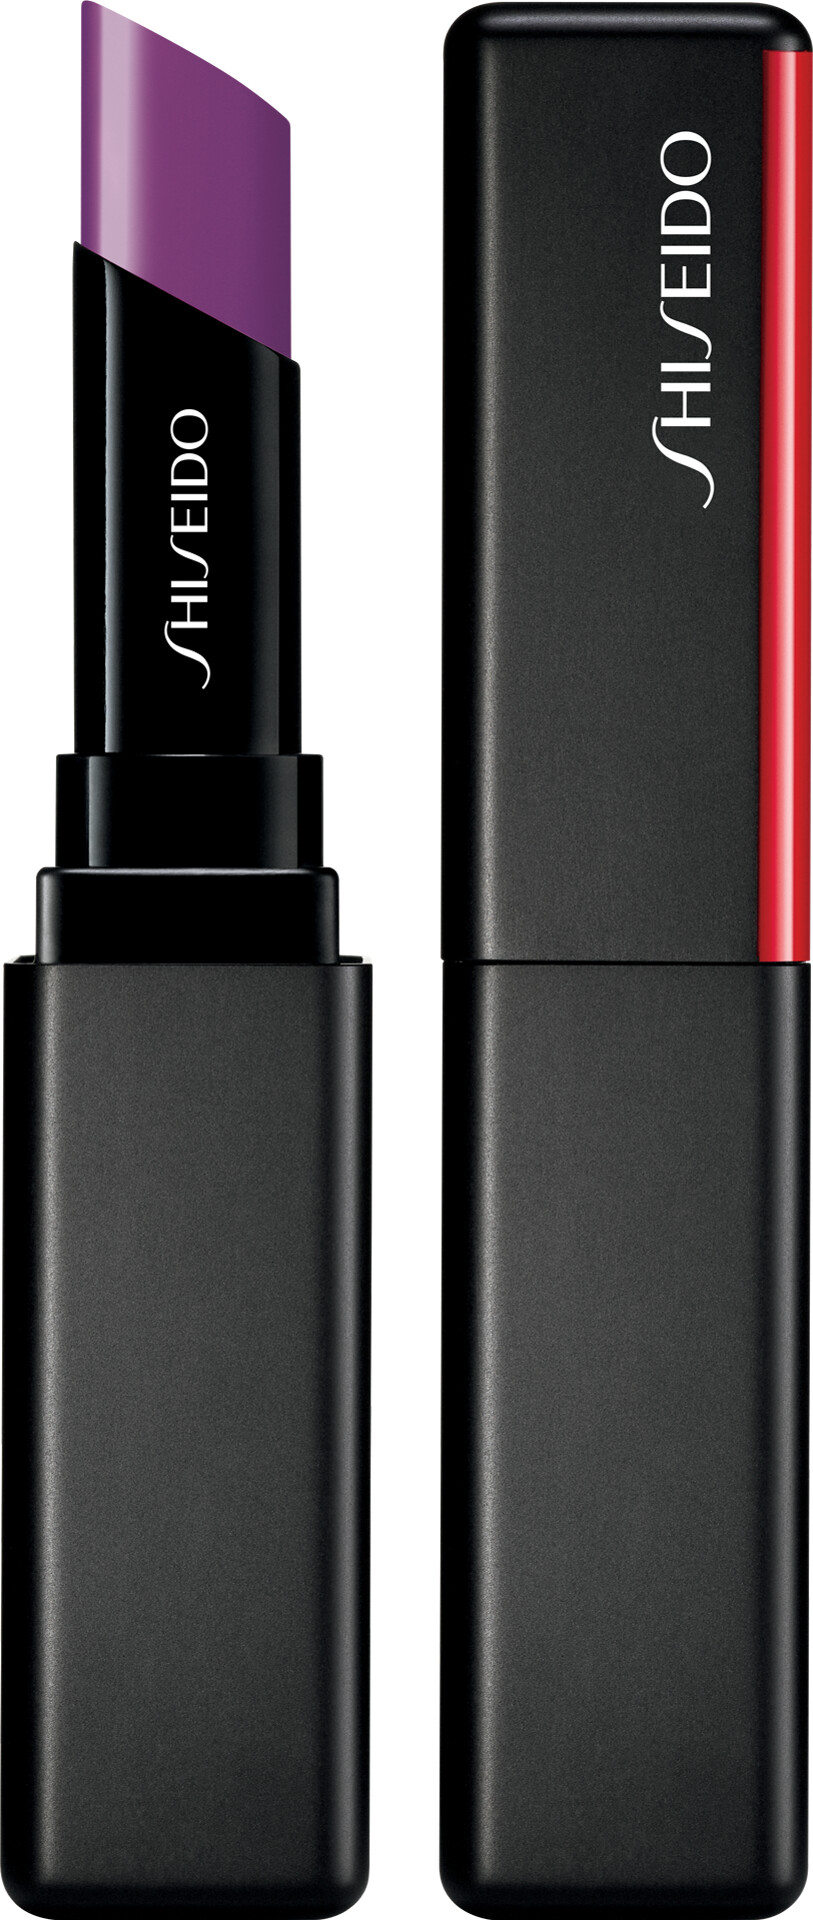 Shiseido ColorGel LipBalm 2g 114 - Lilac